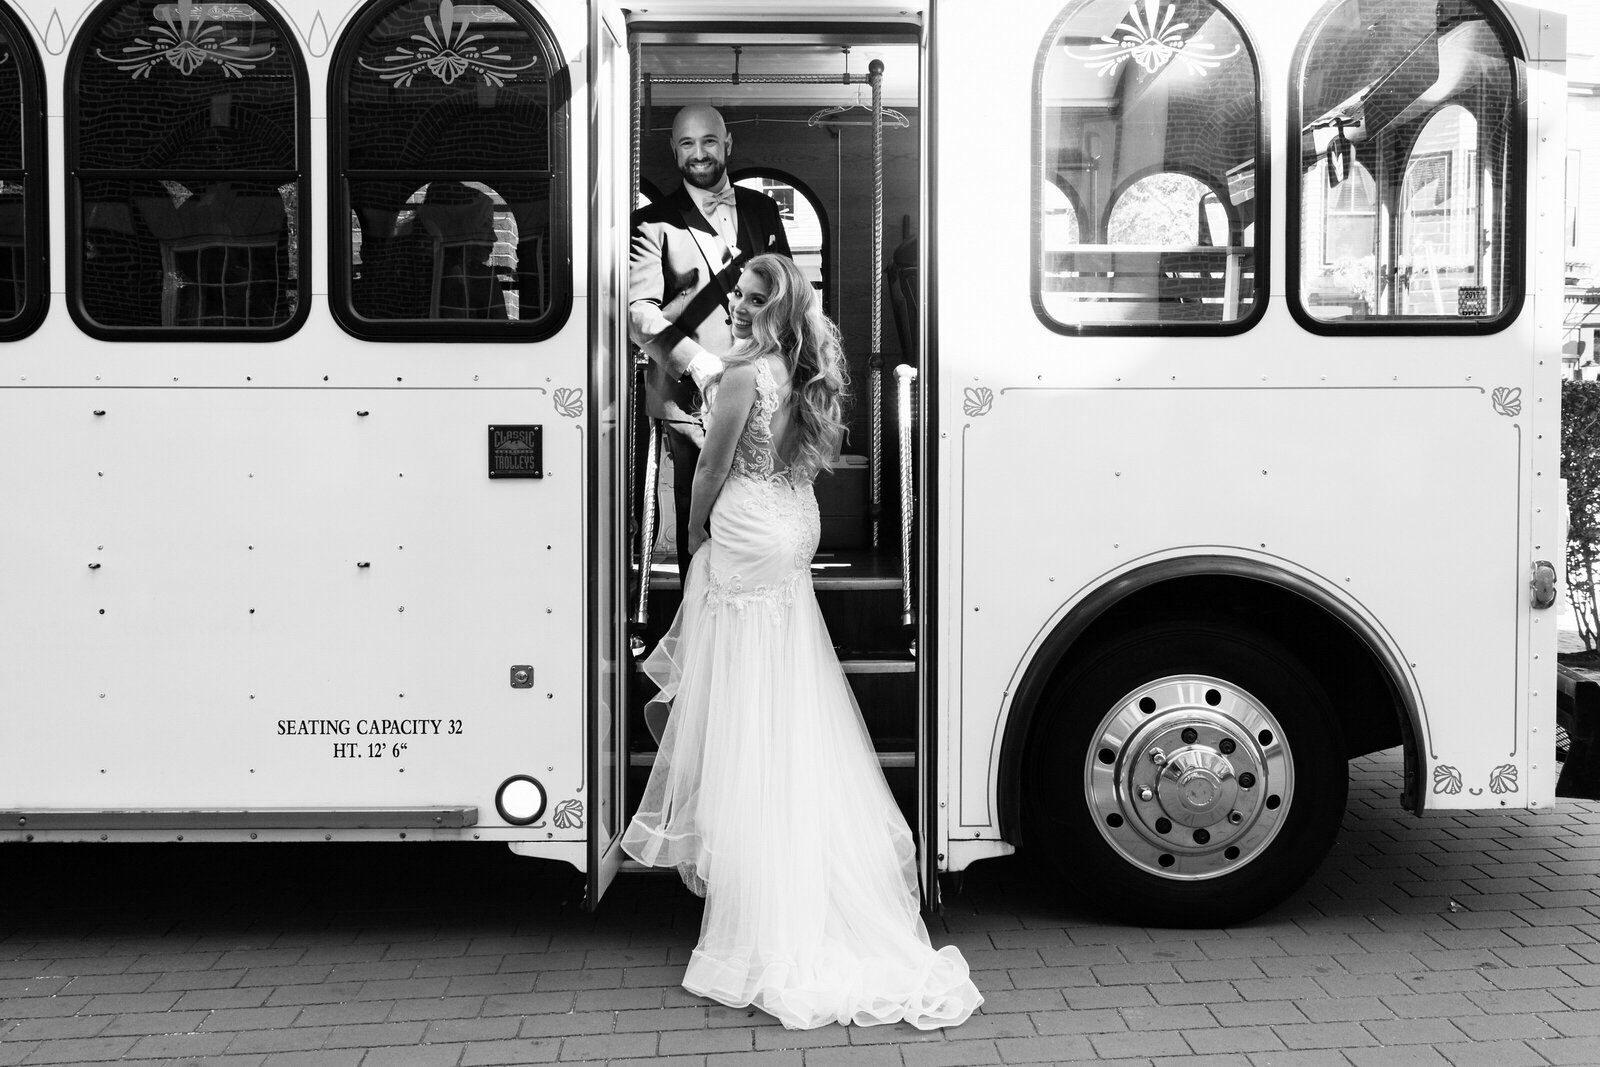 New-England-Wedding-Photographer-Sabrina-Scolari-26